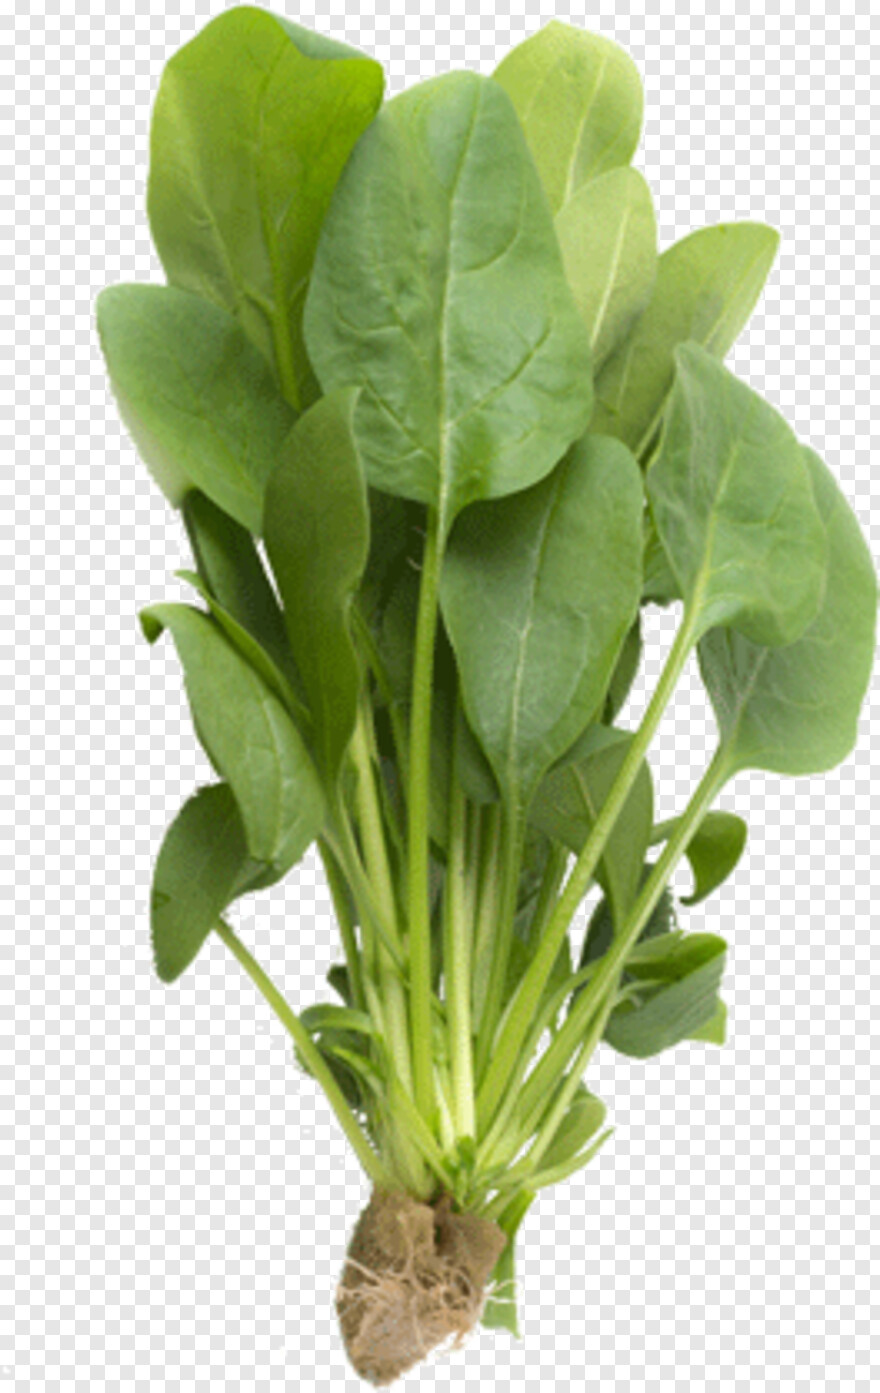 spinach # 842334